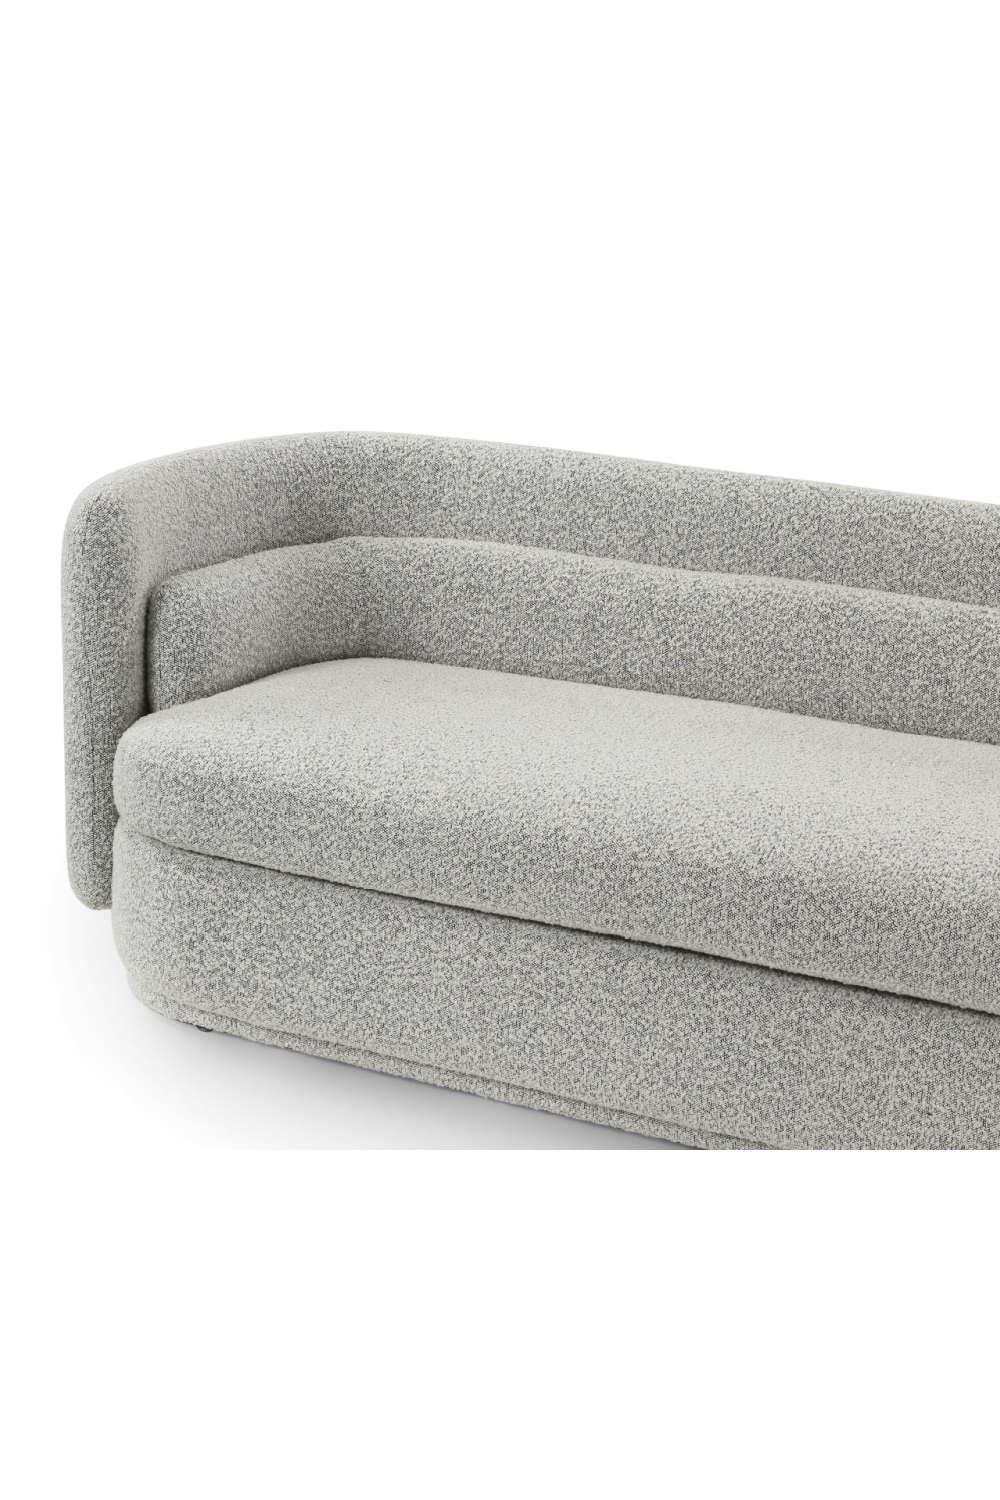 Gray Bouclé Contemporary Sofa | Liang & Eimil Selma | Oroa.com